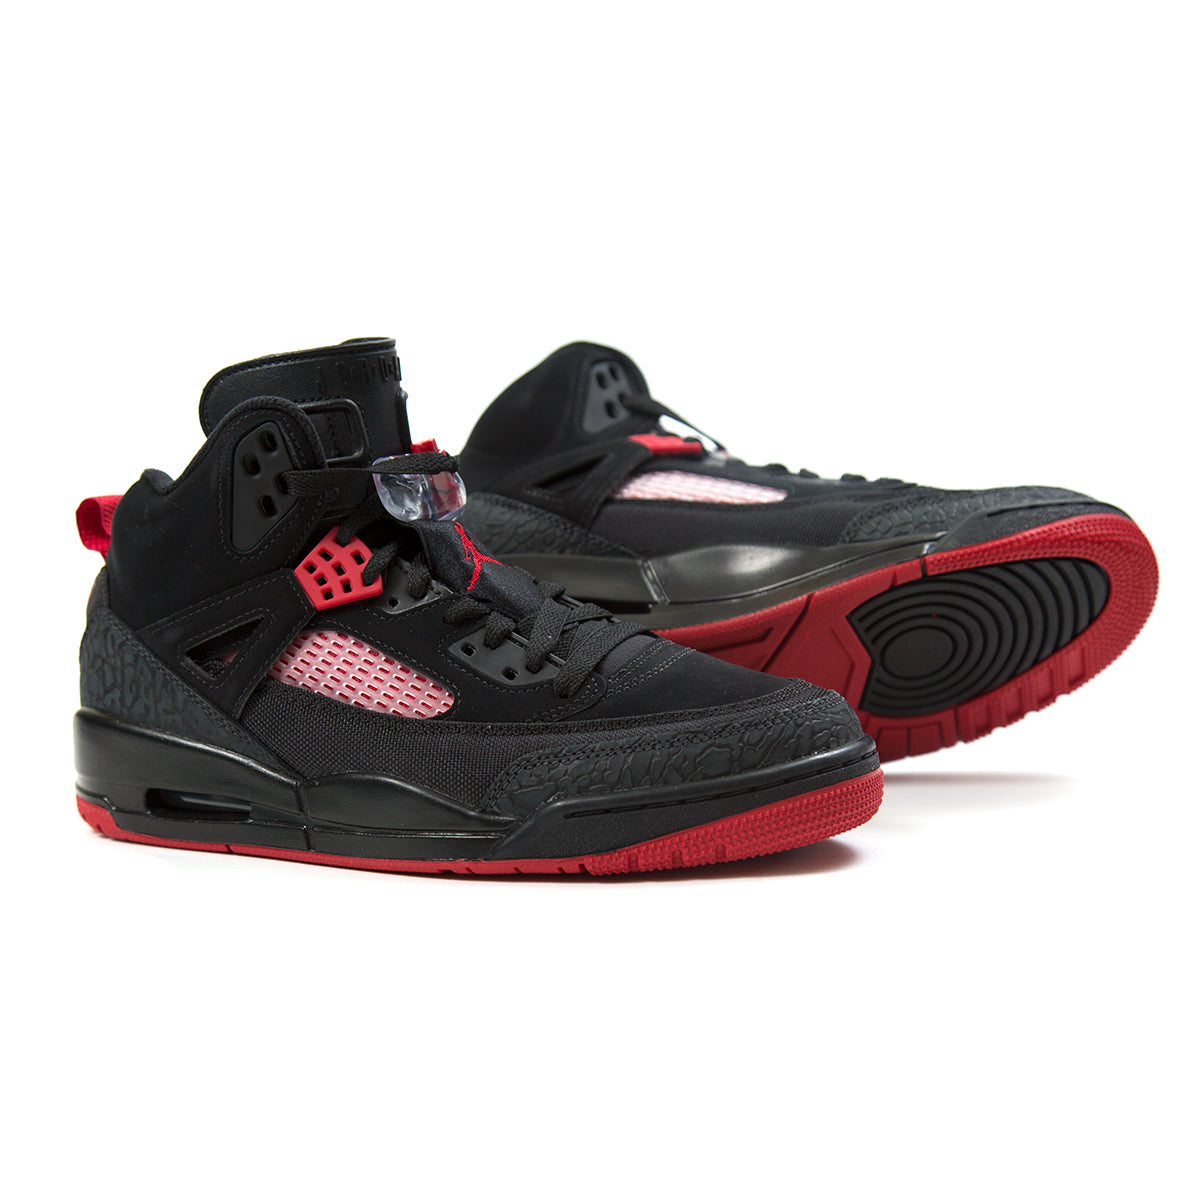 Conceptsintl Nike Jordan Spizike Blackgym Redanthracite